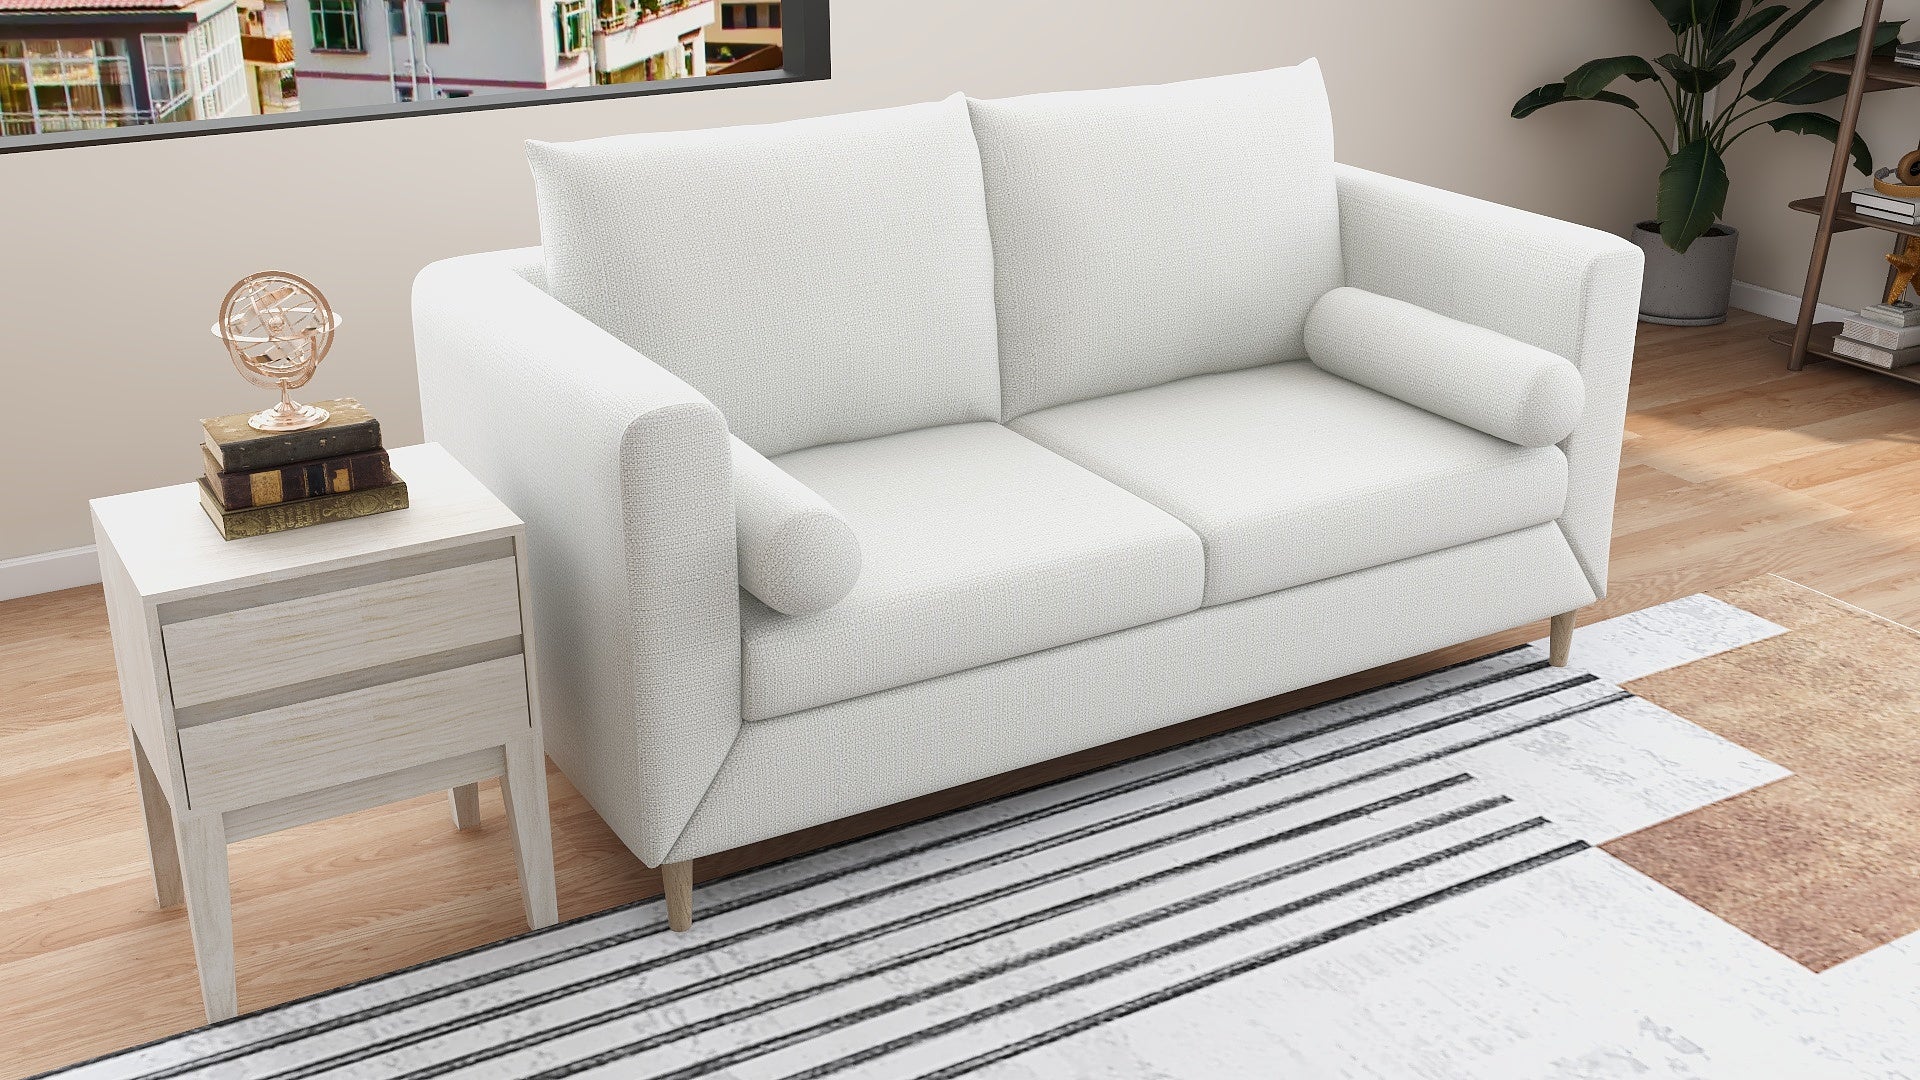 JASMIN 3 Seater Fabric Sofa with Pillows AF Home